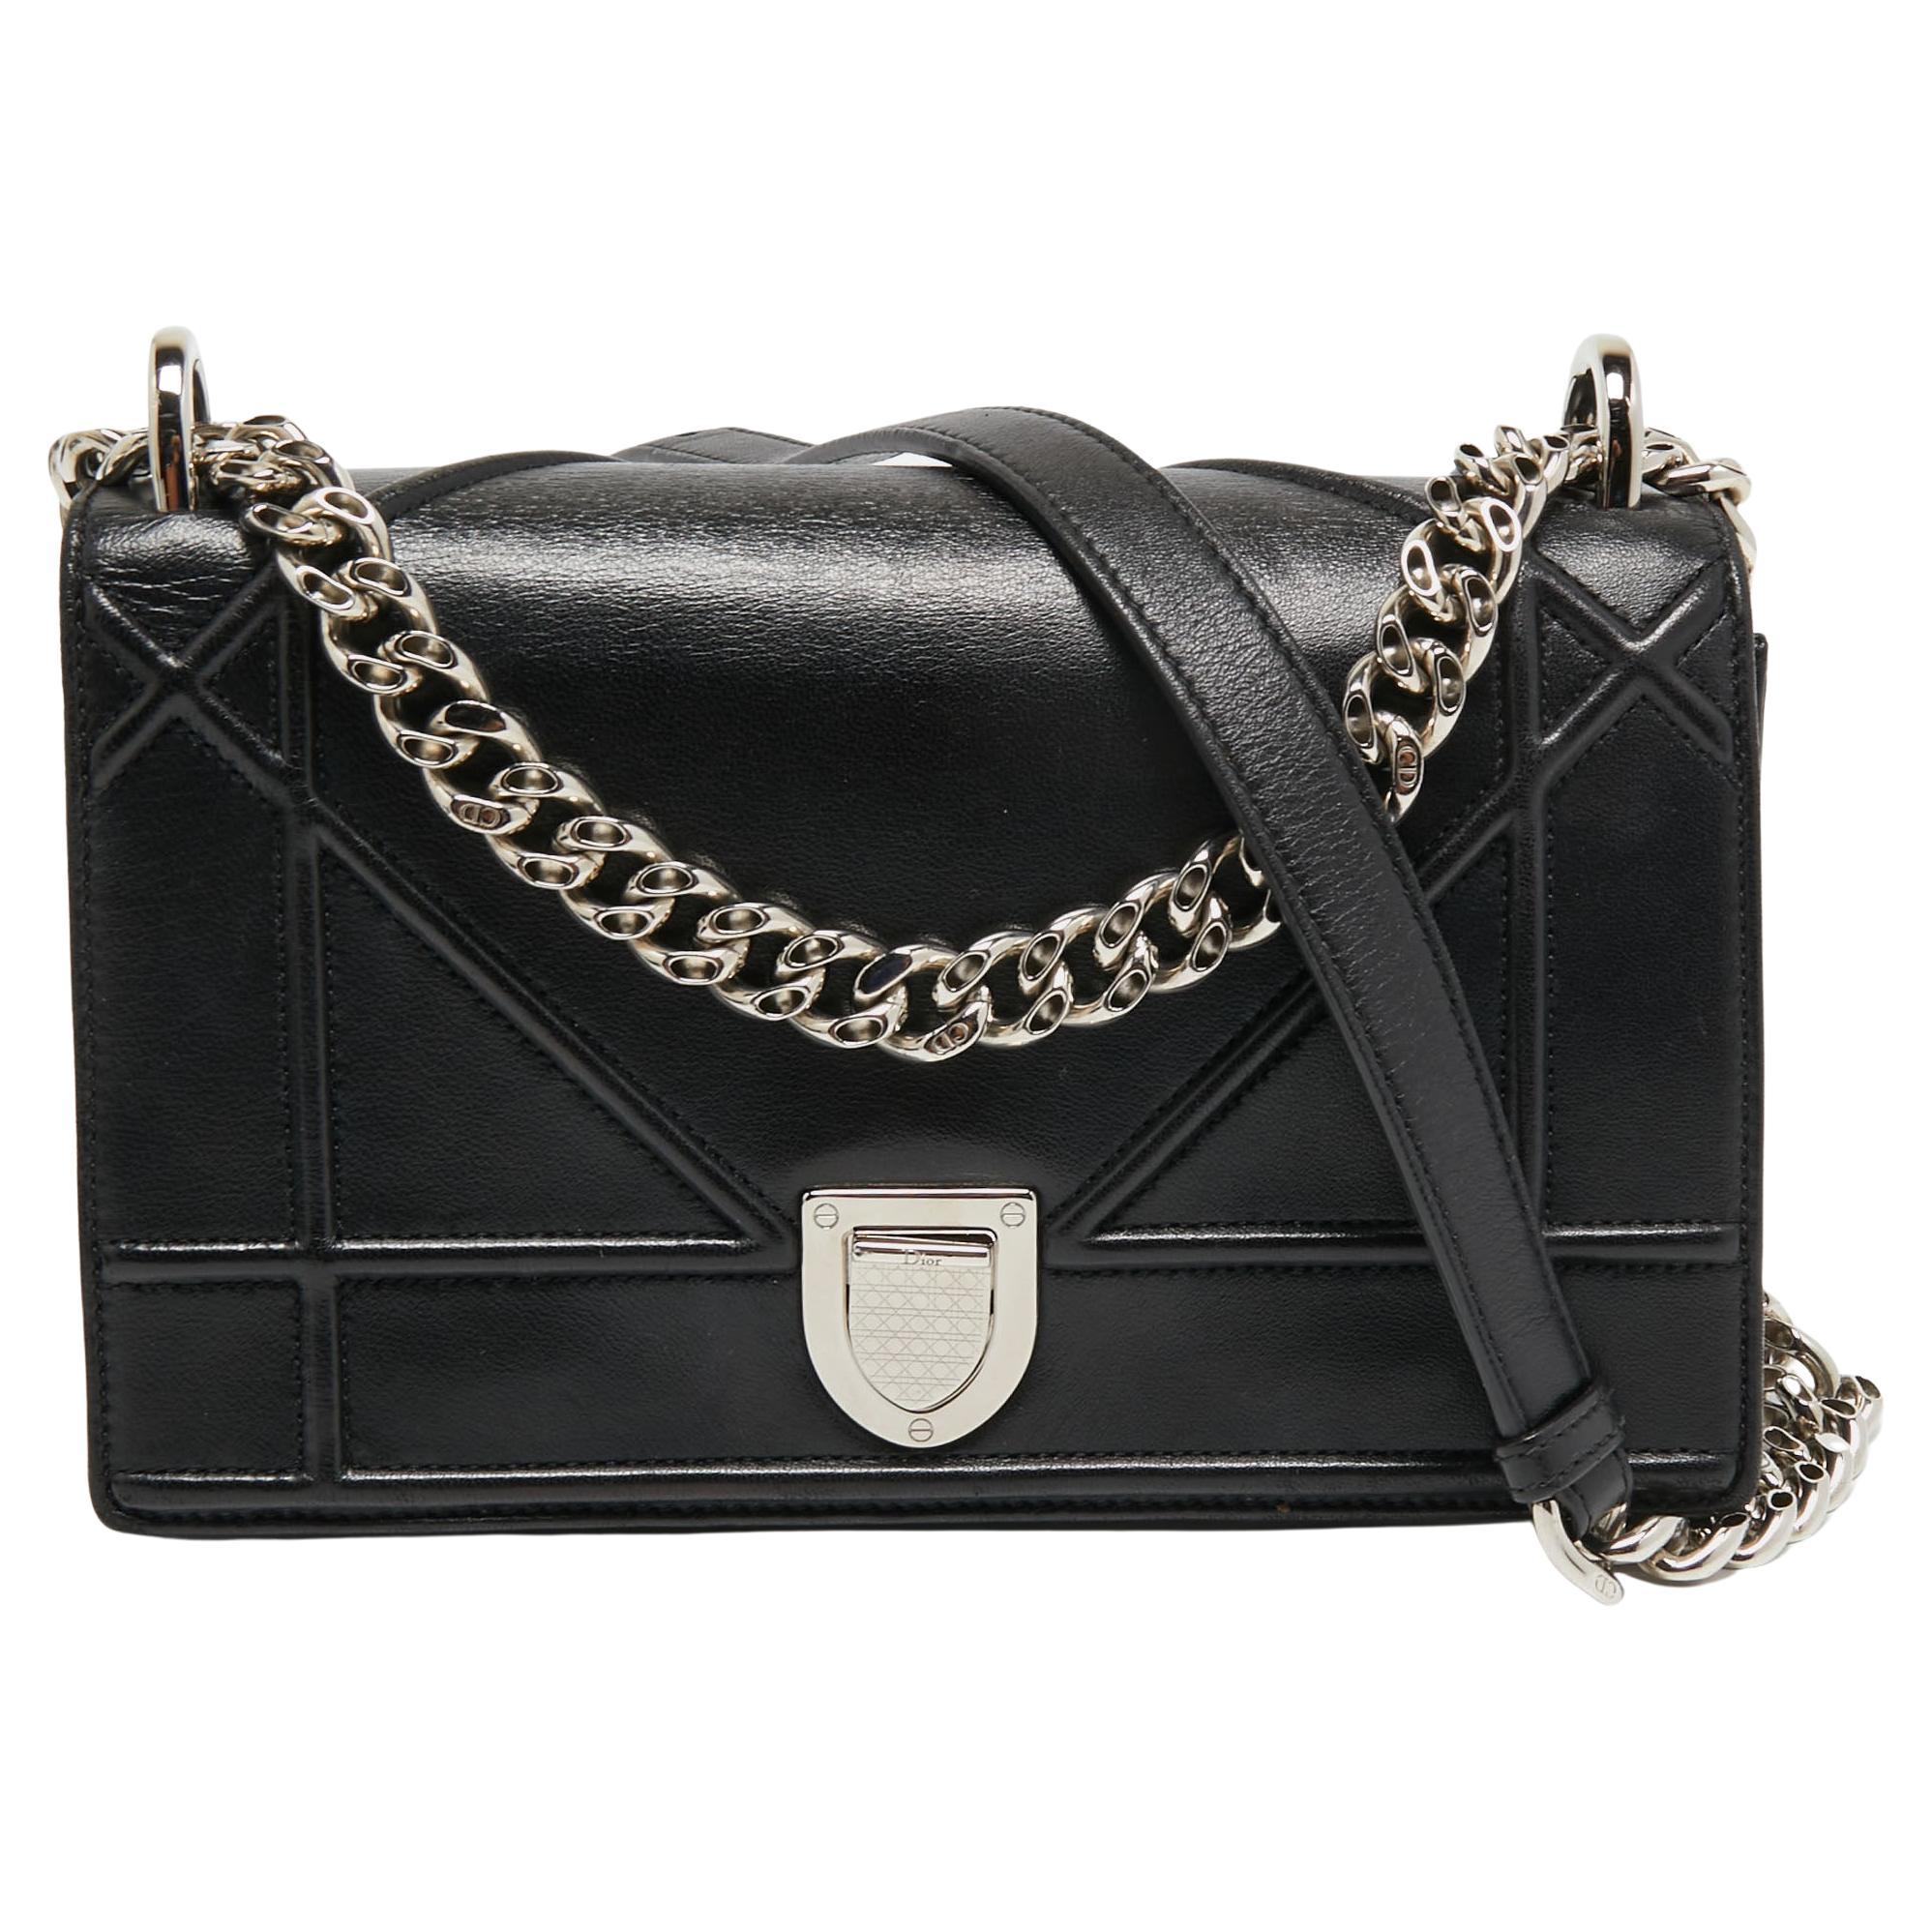 Dior Black Leather Small Diorama Shoulder Bag